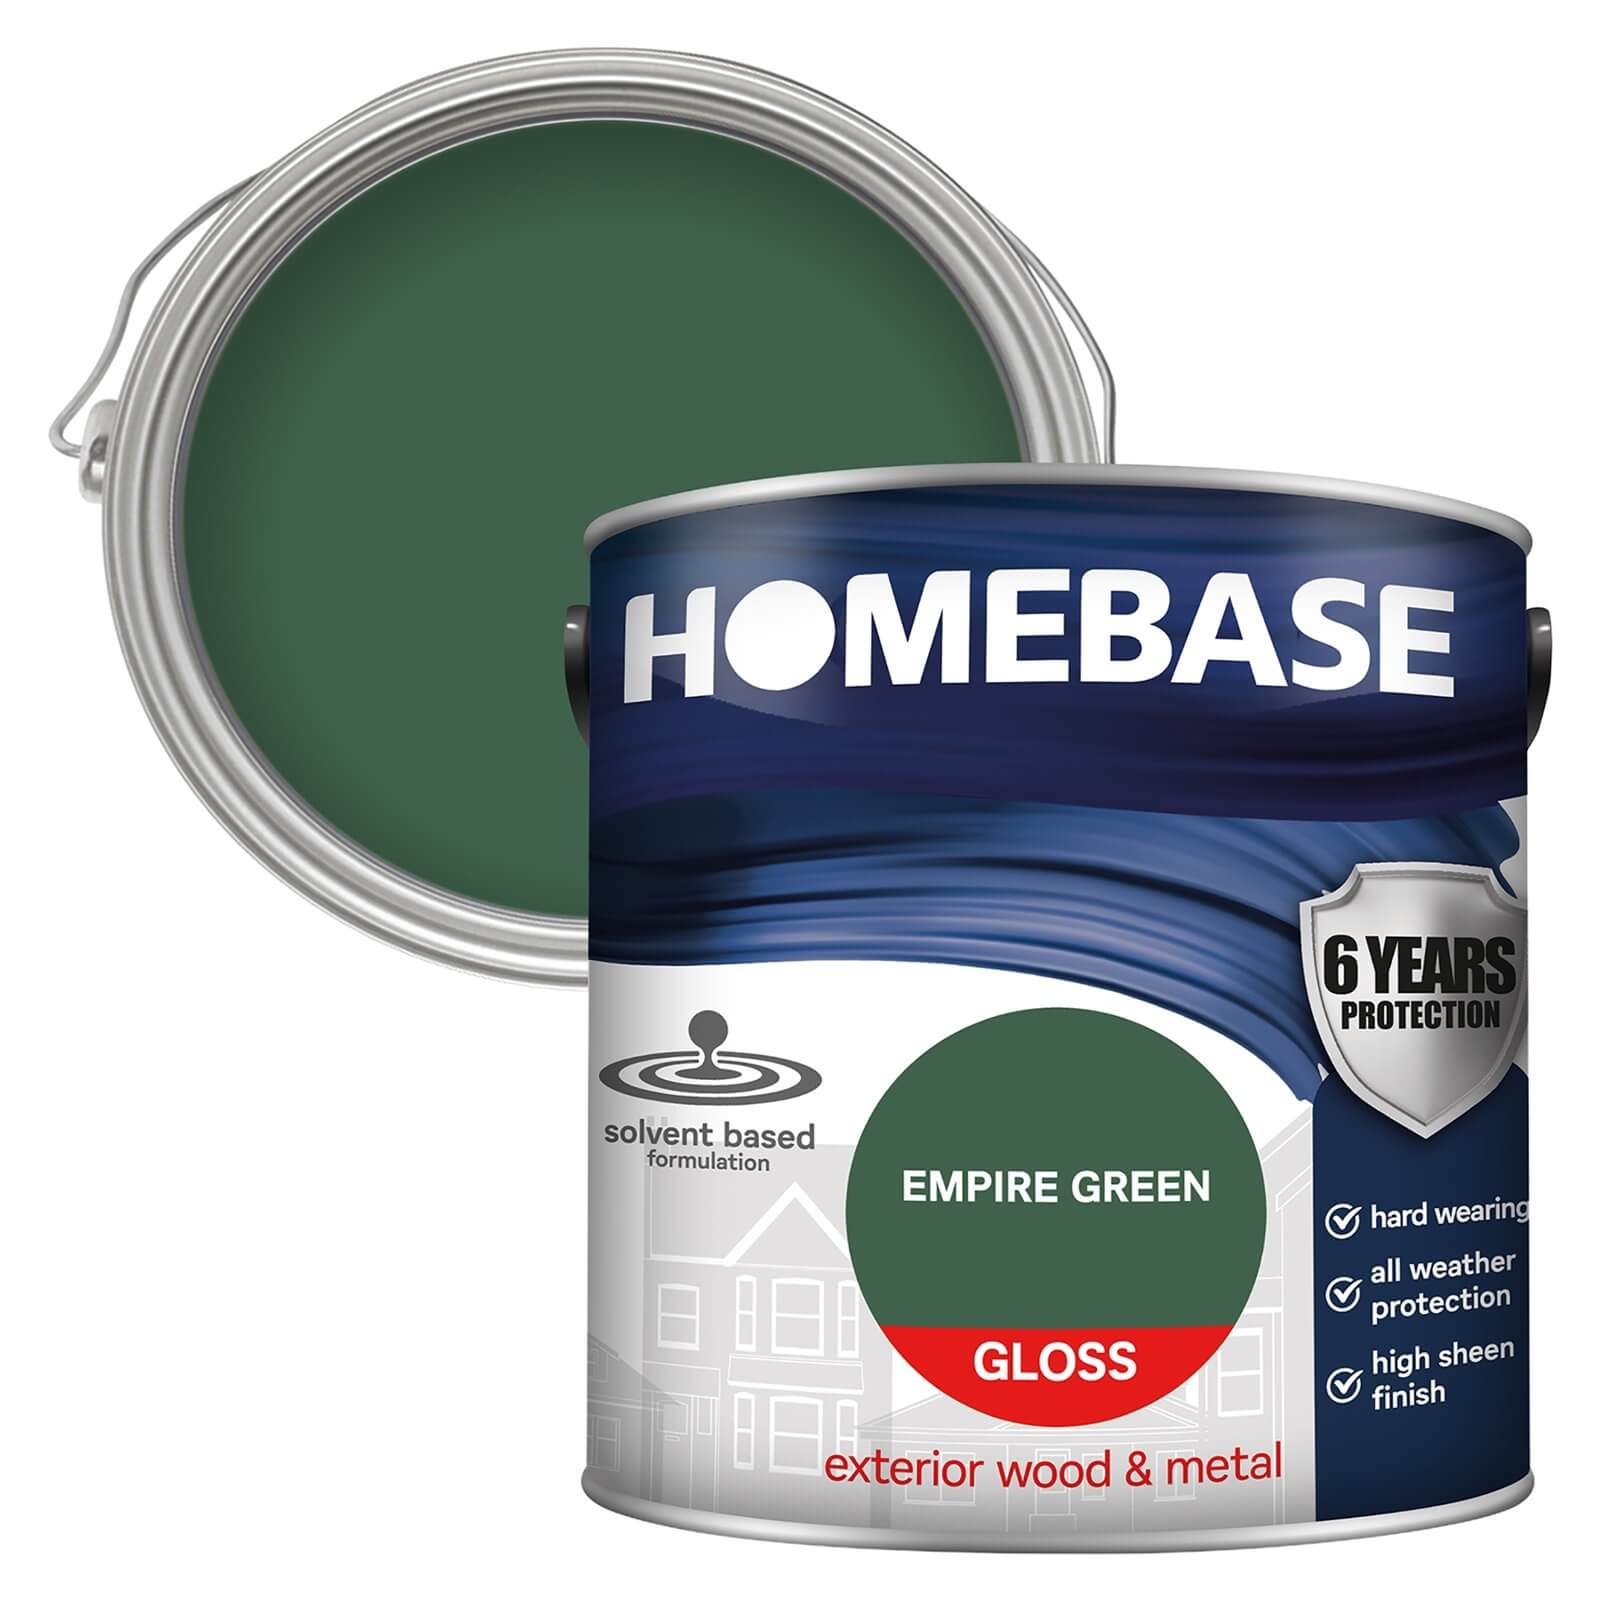 Homebase Exterior Gloss Paint - Empire Green 2.5L